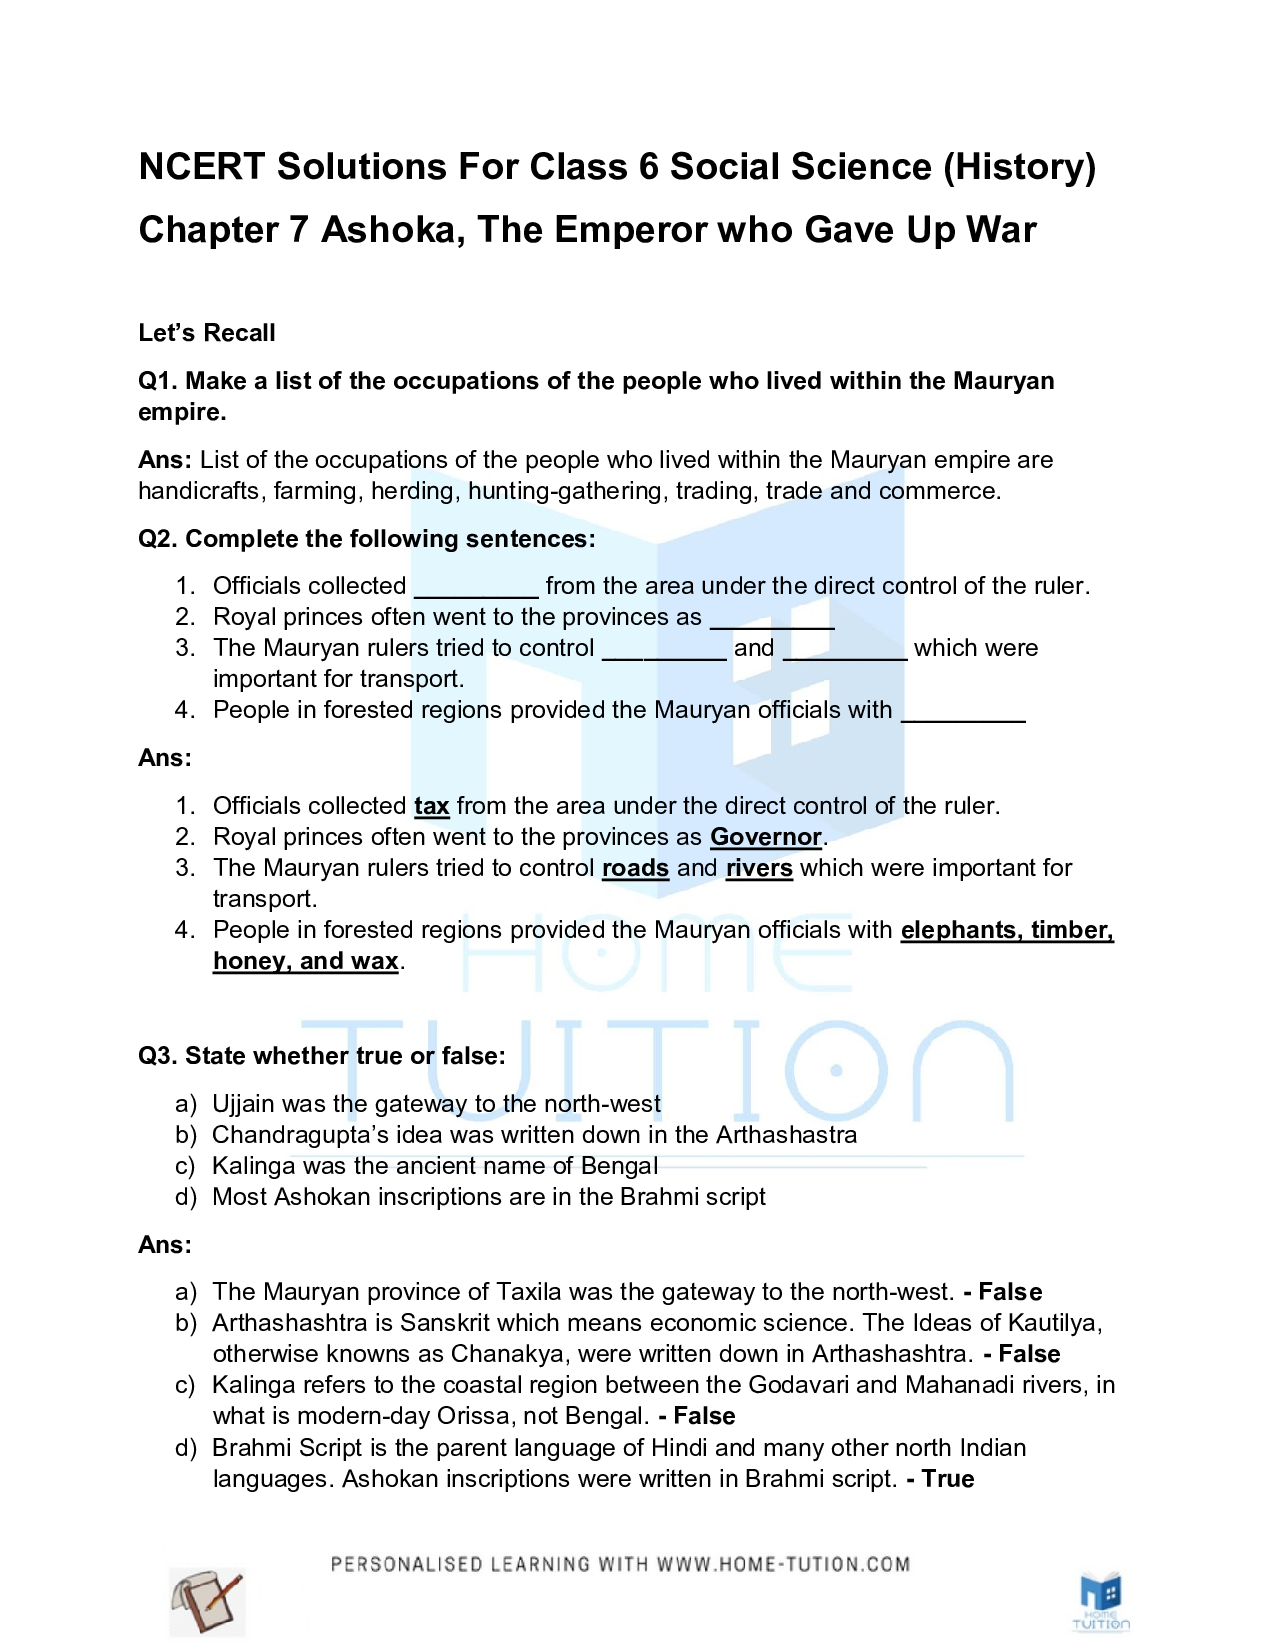 Chapter 7 Ashoka the Emperor who Gave up war